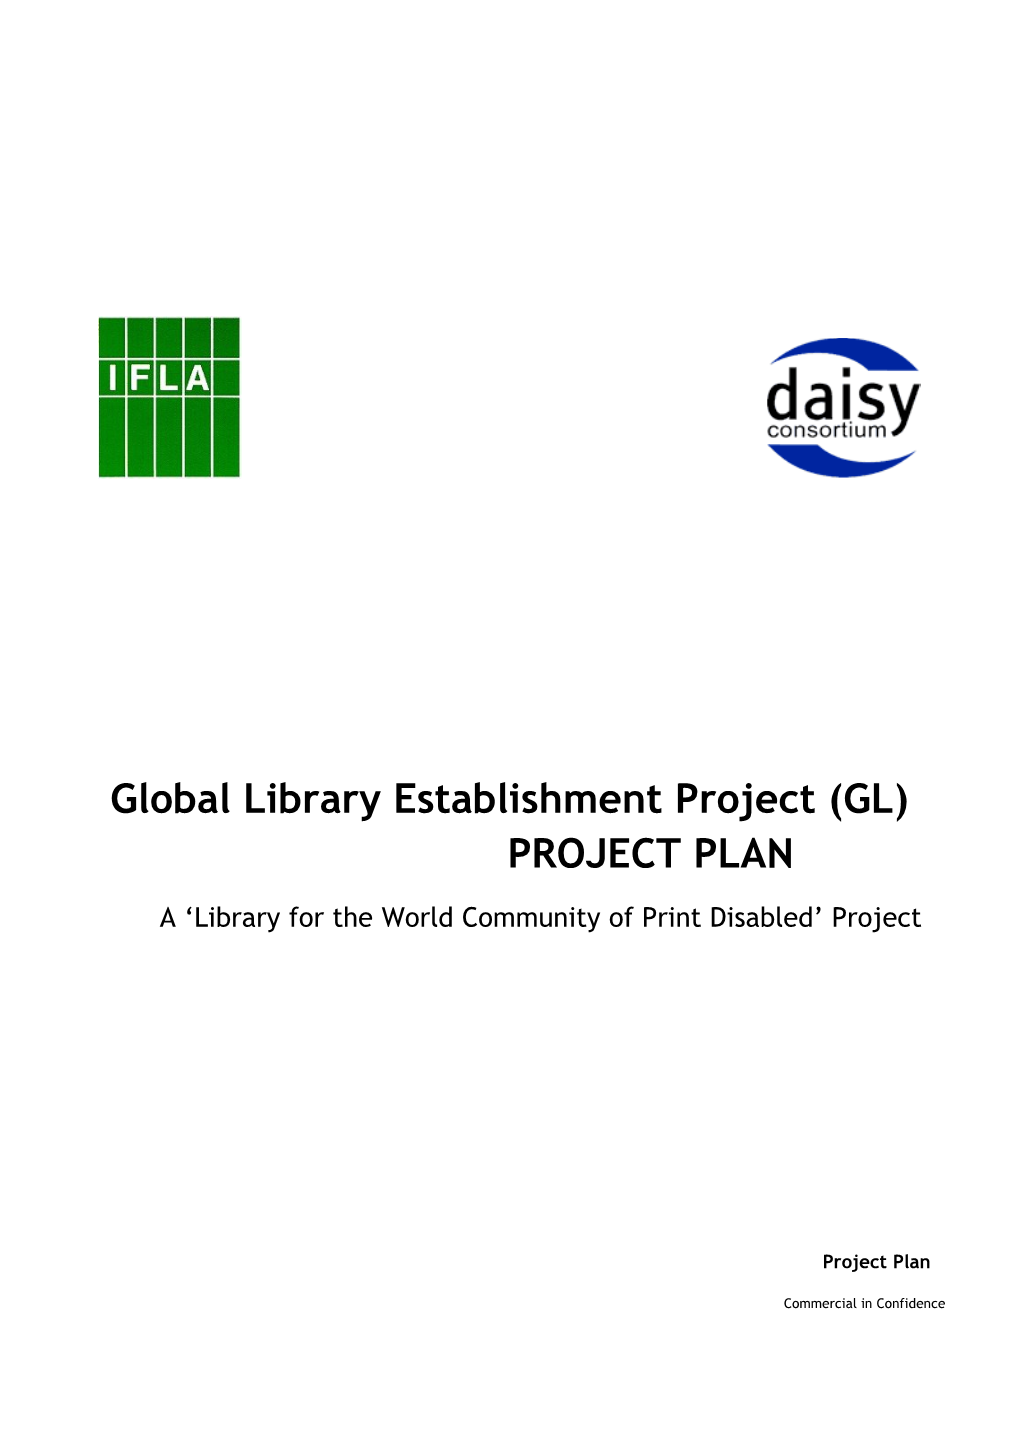 GL Project Plan